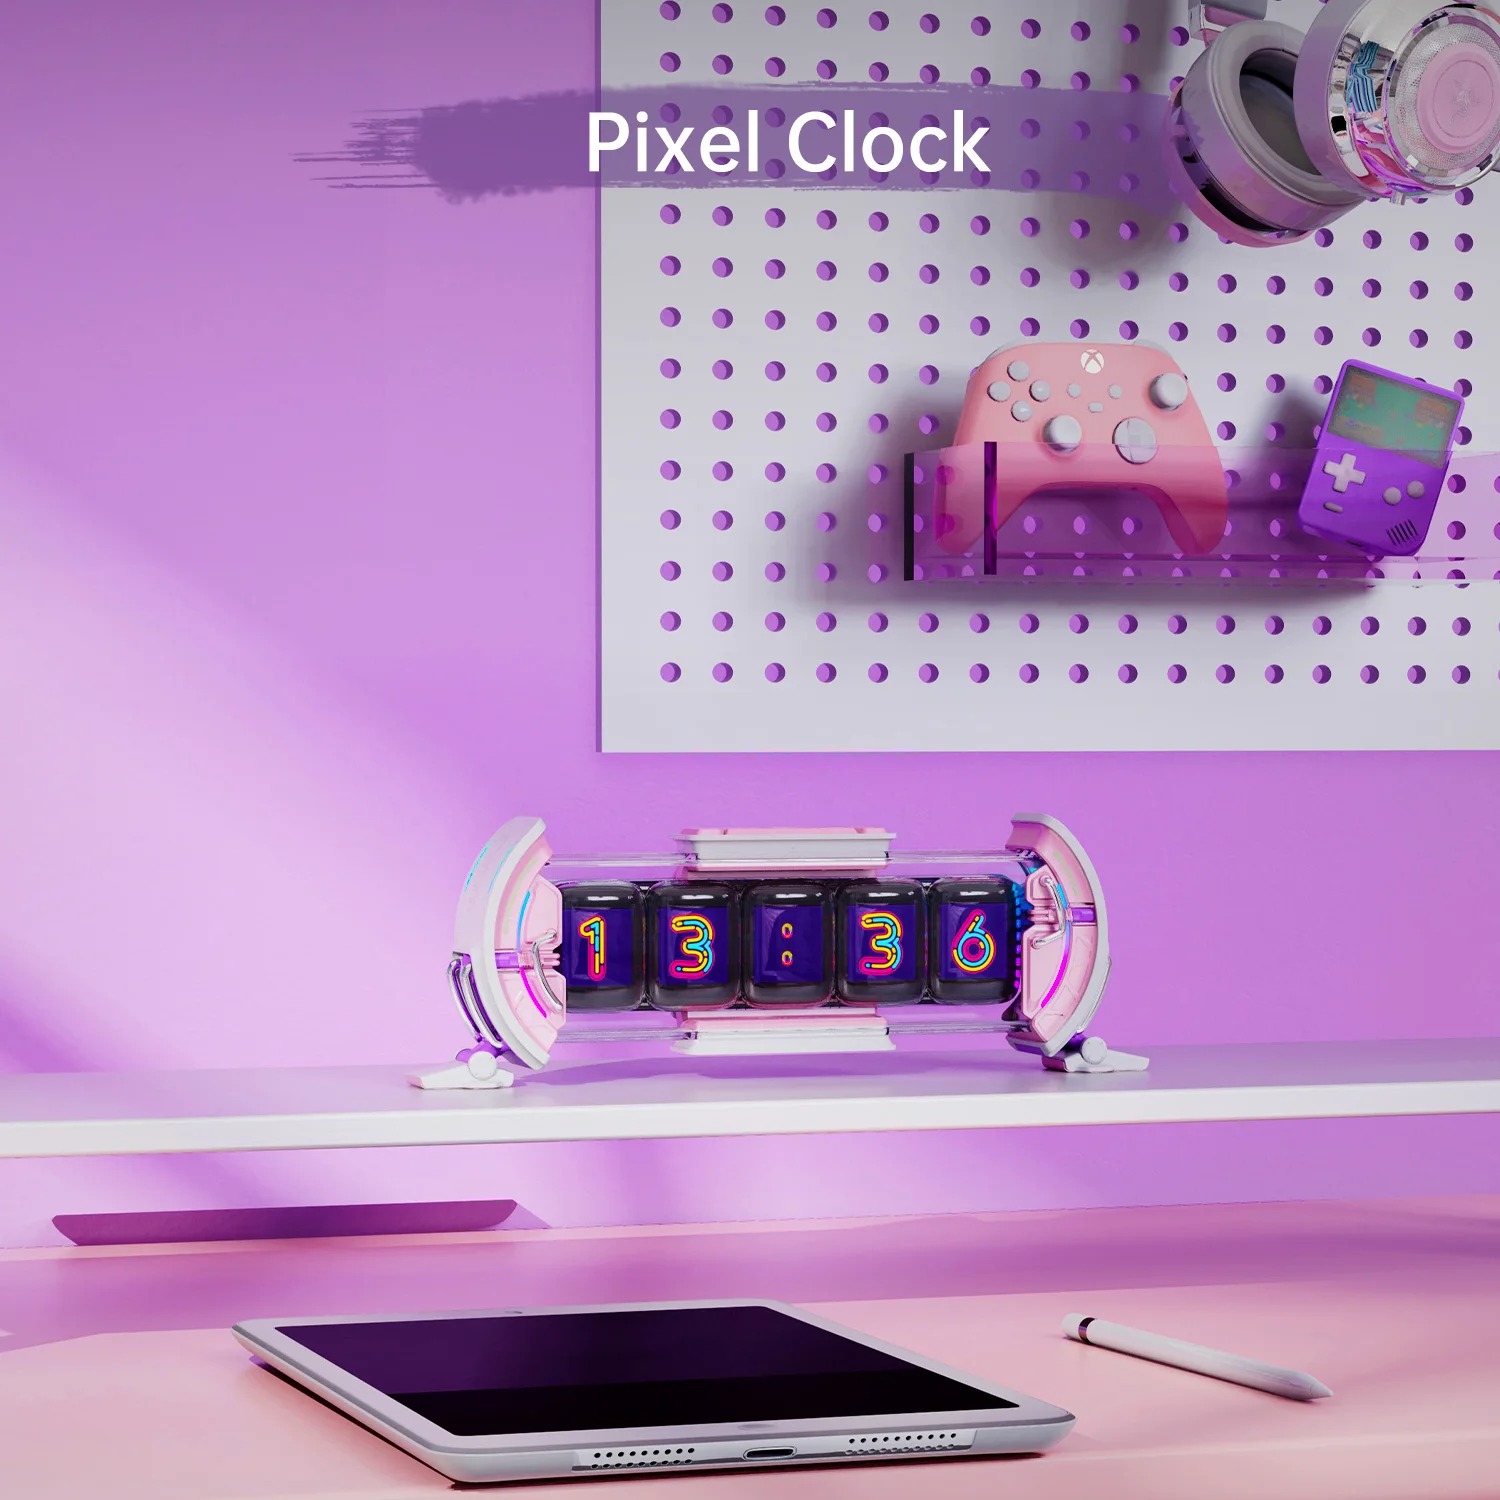 Divoom Times Gate Cute Gaming Digital Clock Informative Display Social Media, Pixel Art Display for Gamers Decor (Pink)